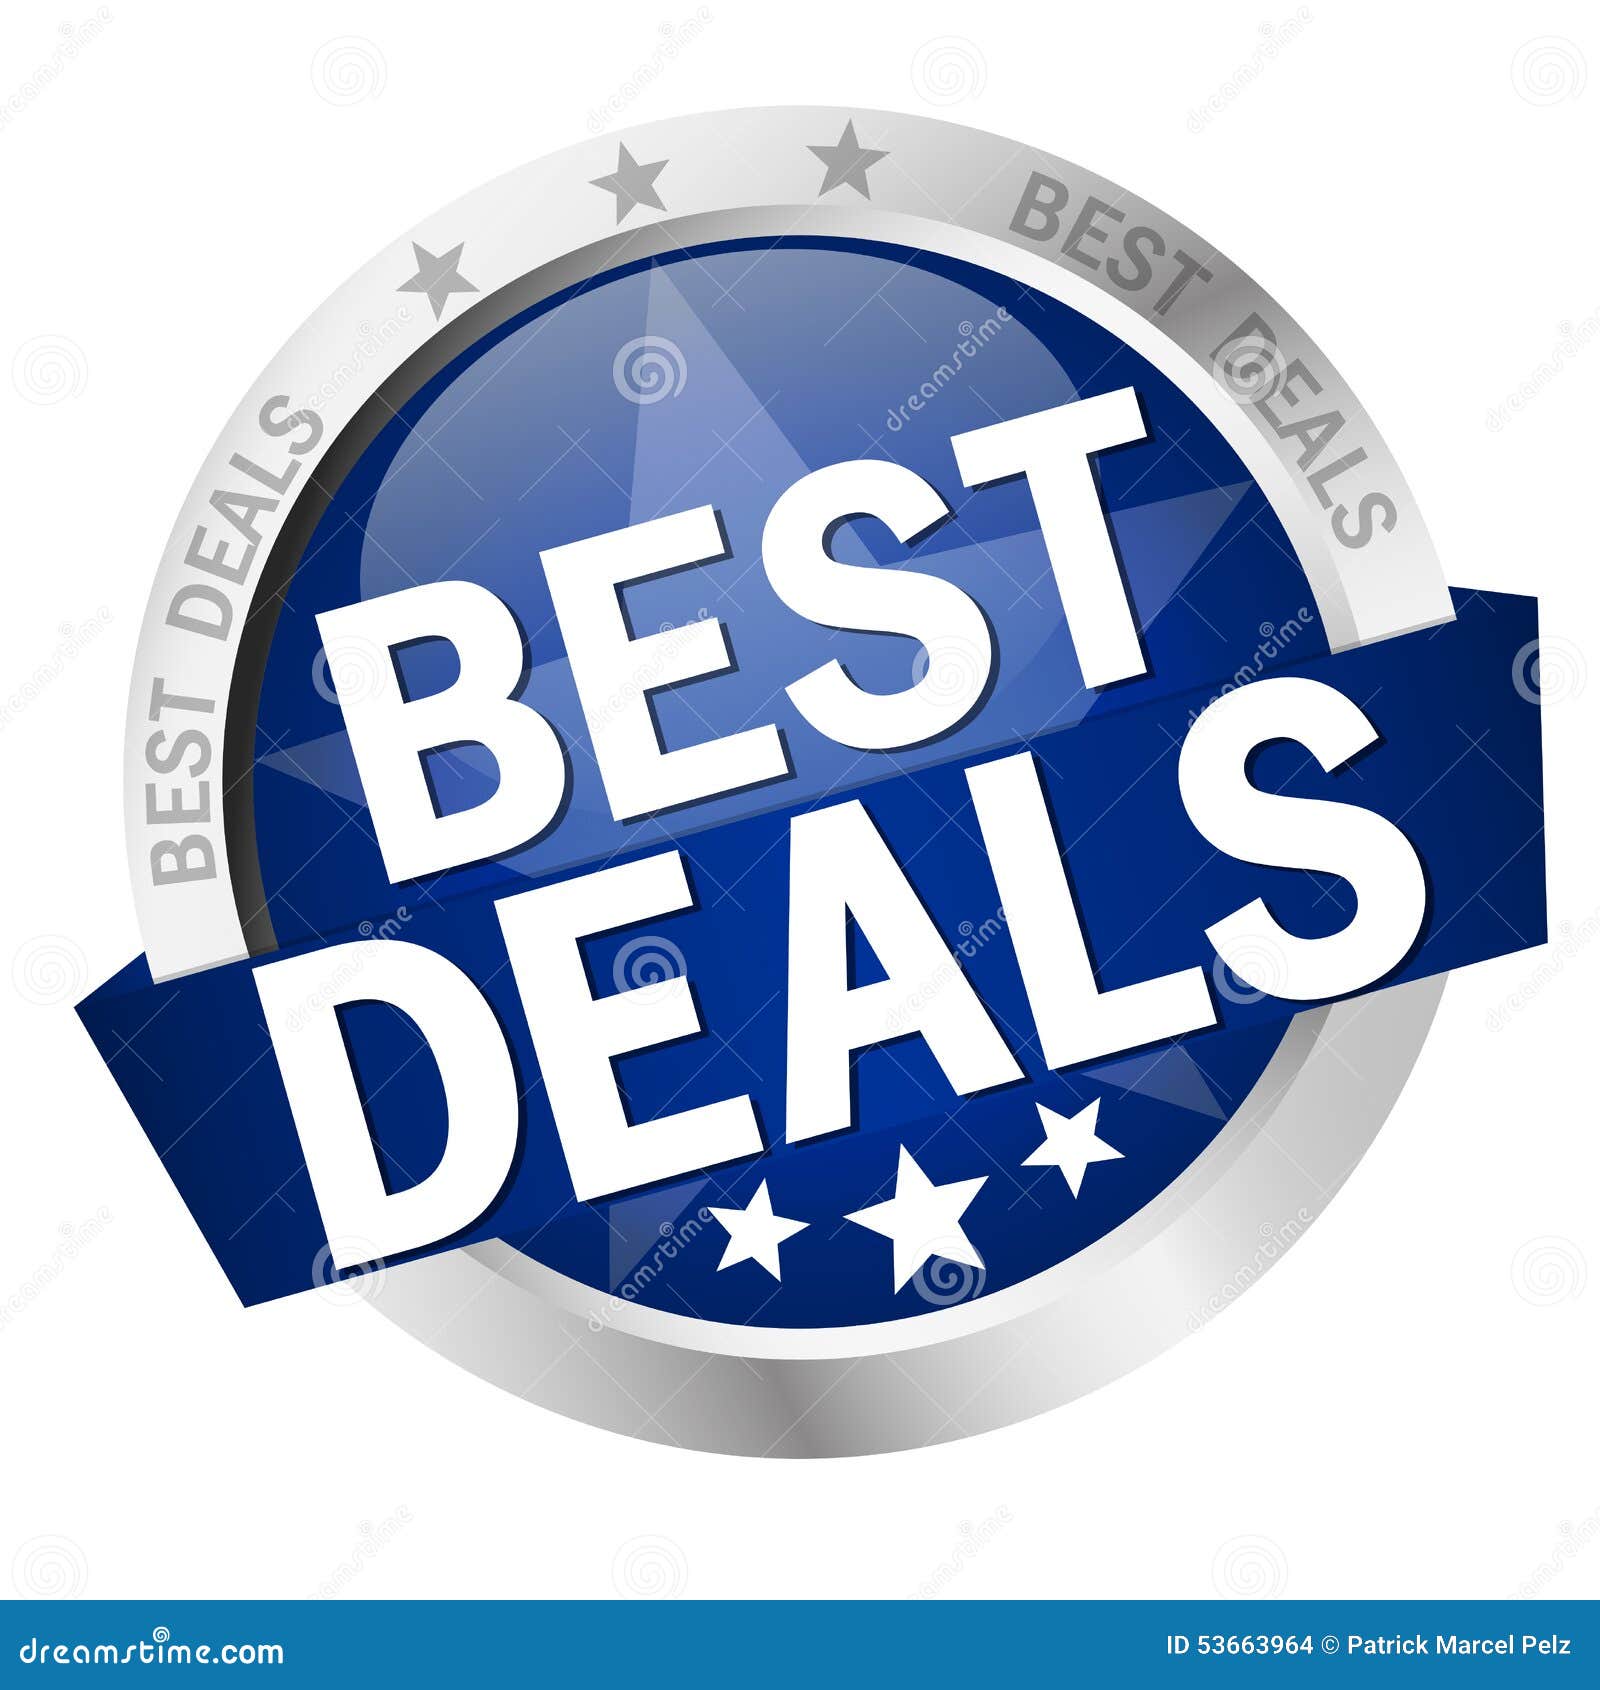 https://thumbs.dreamstime.com/z/button-text-best-deals-round-banner-53663964.jpg